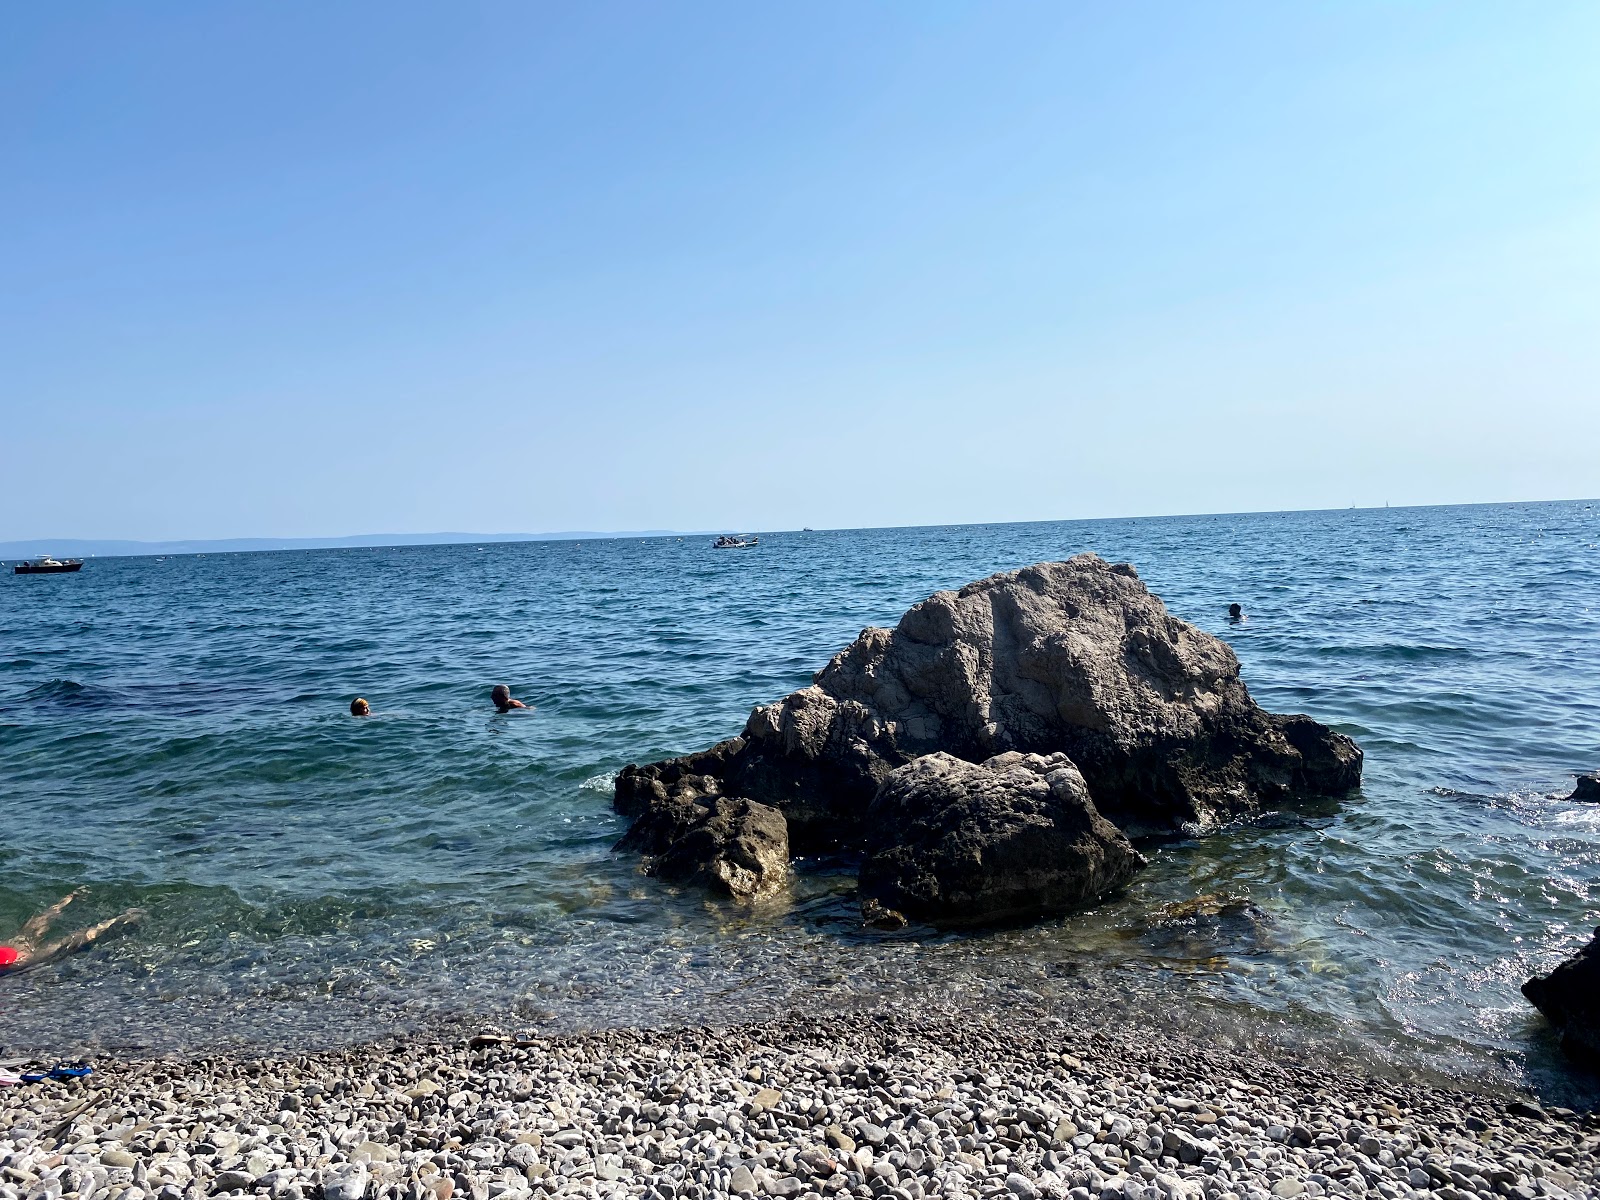 Photo of Spiaggia Liburnia located in natural area